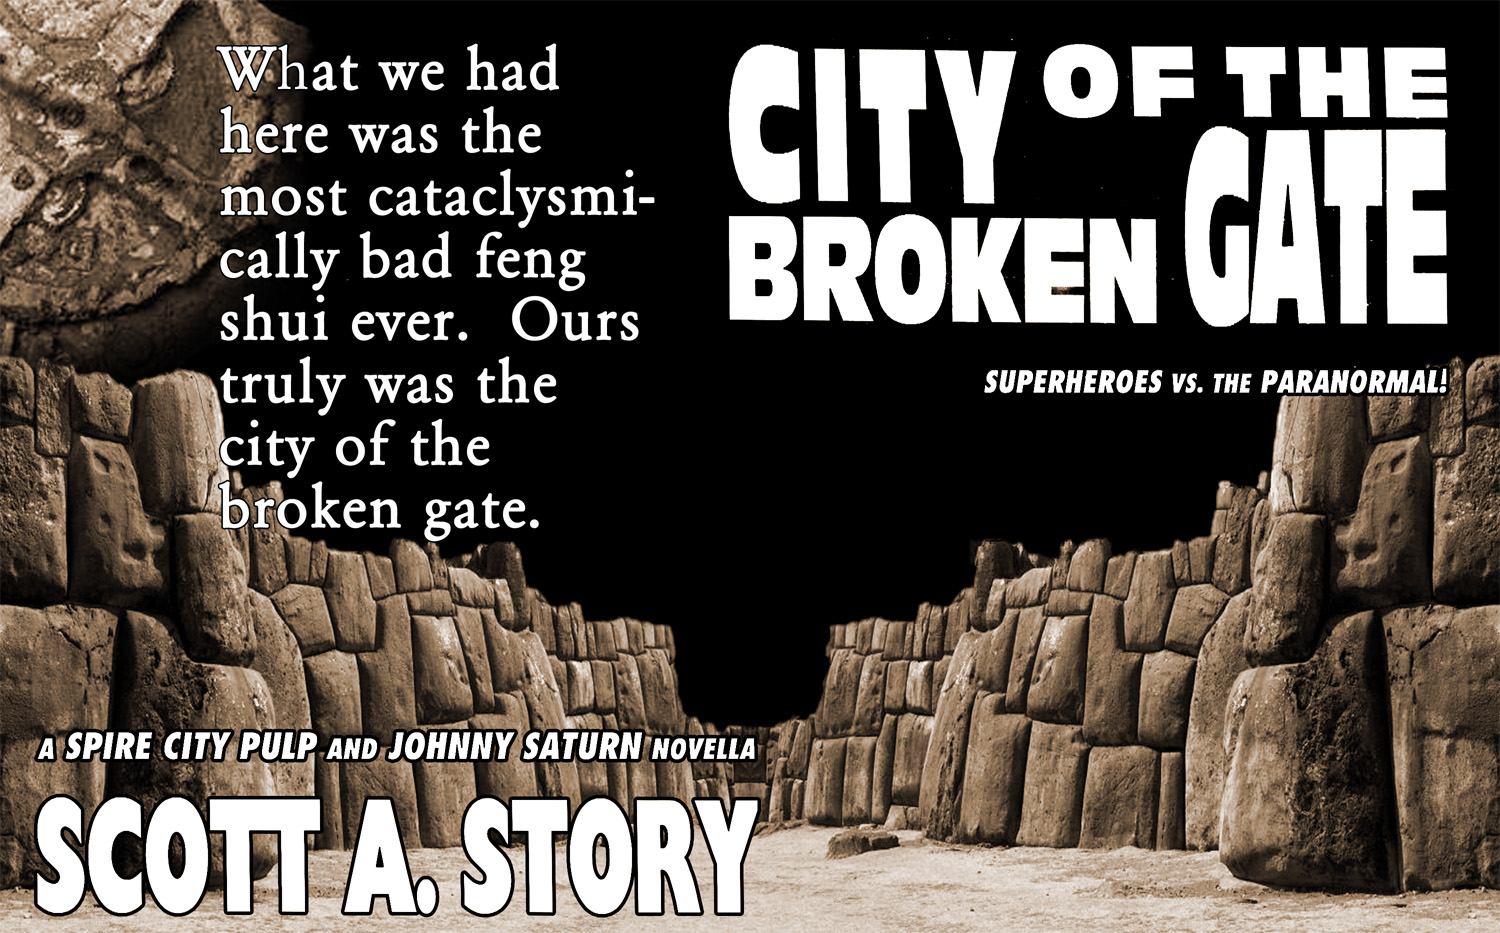 City of the Broken Gate, Johnny Saturn, Scott A. Story